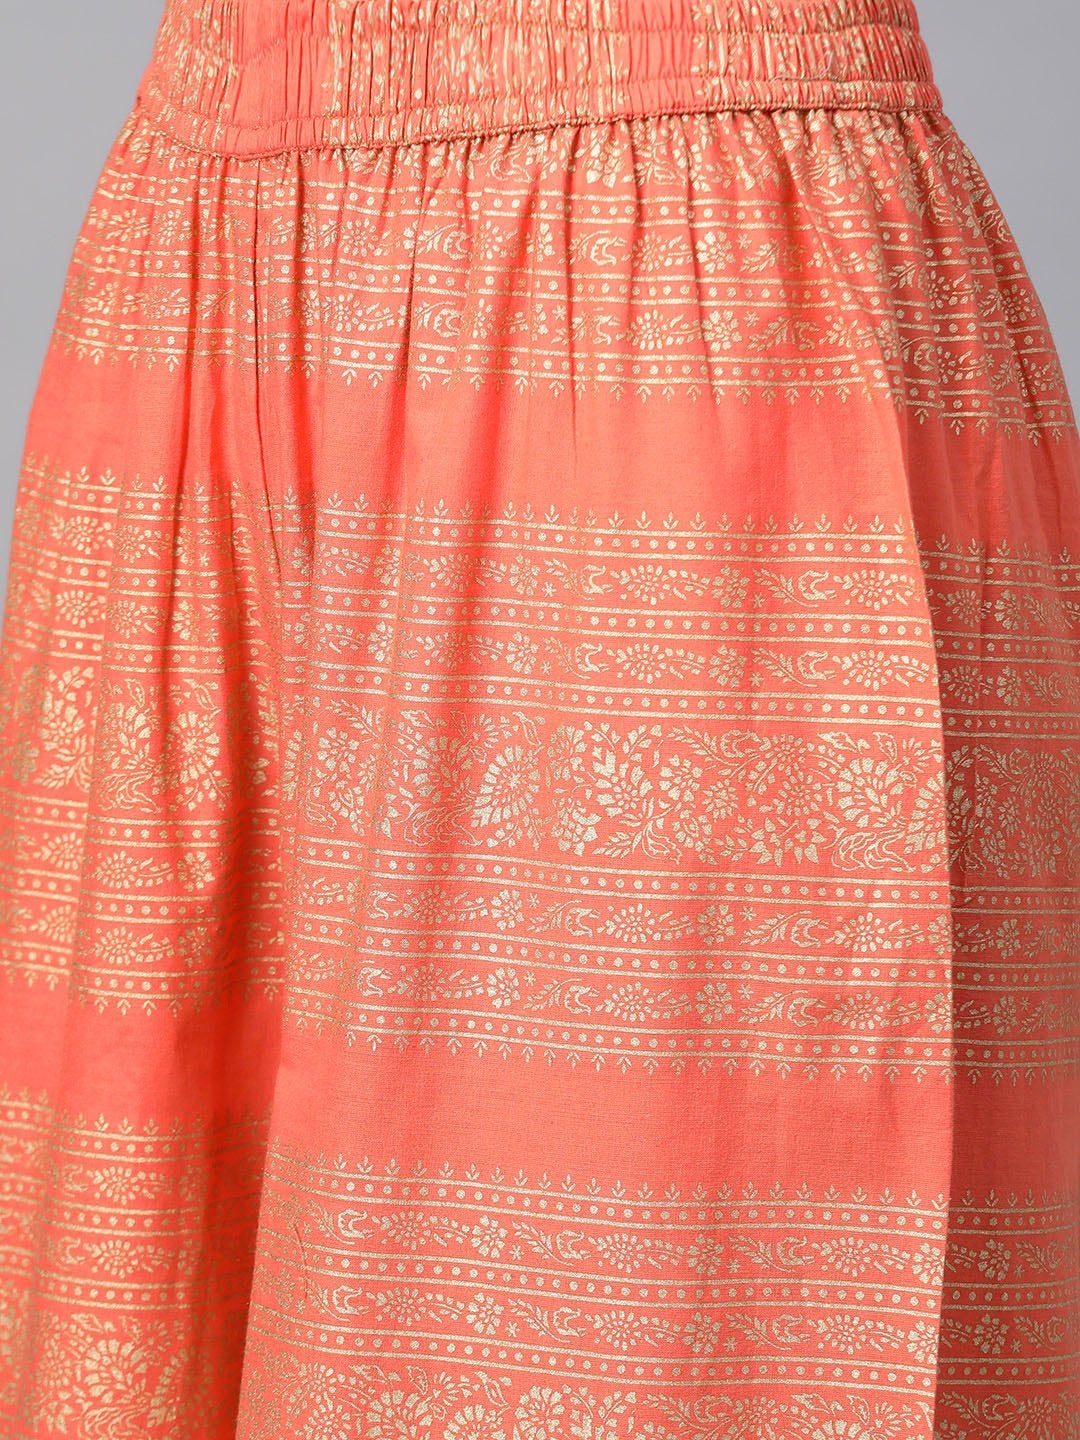 Women's Coral Orange & Golden Printed Pure Cotton Kurta with Palazzos - Meeranshi